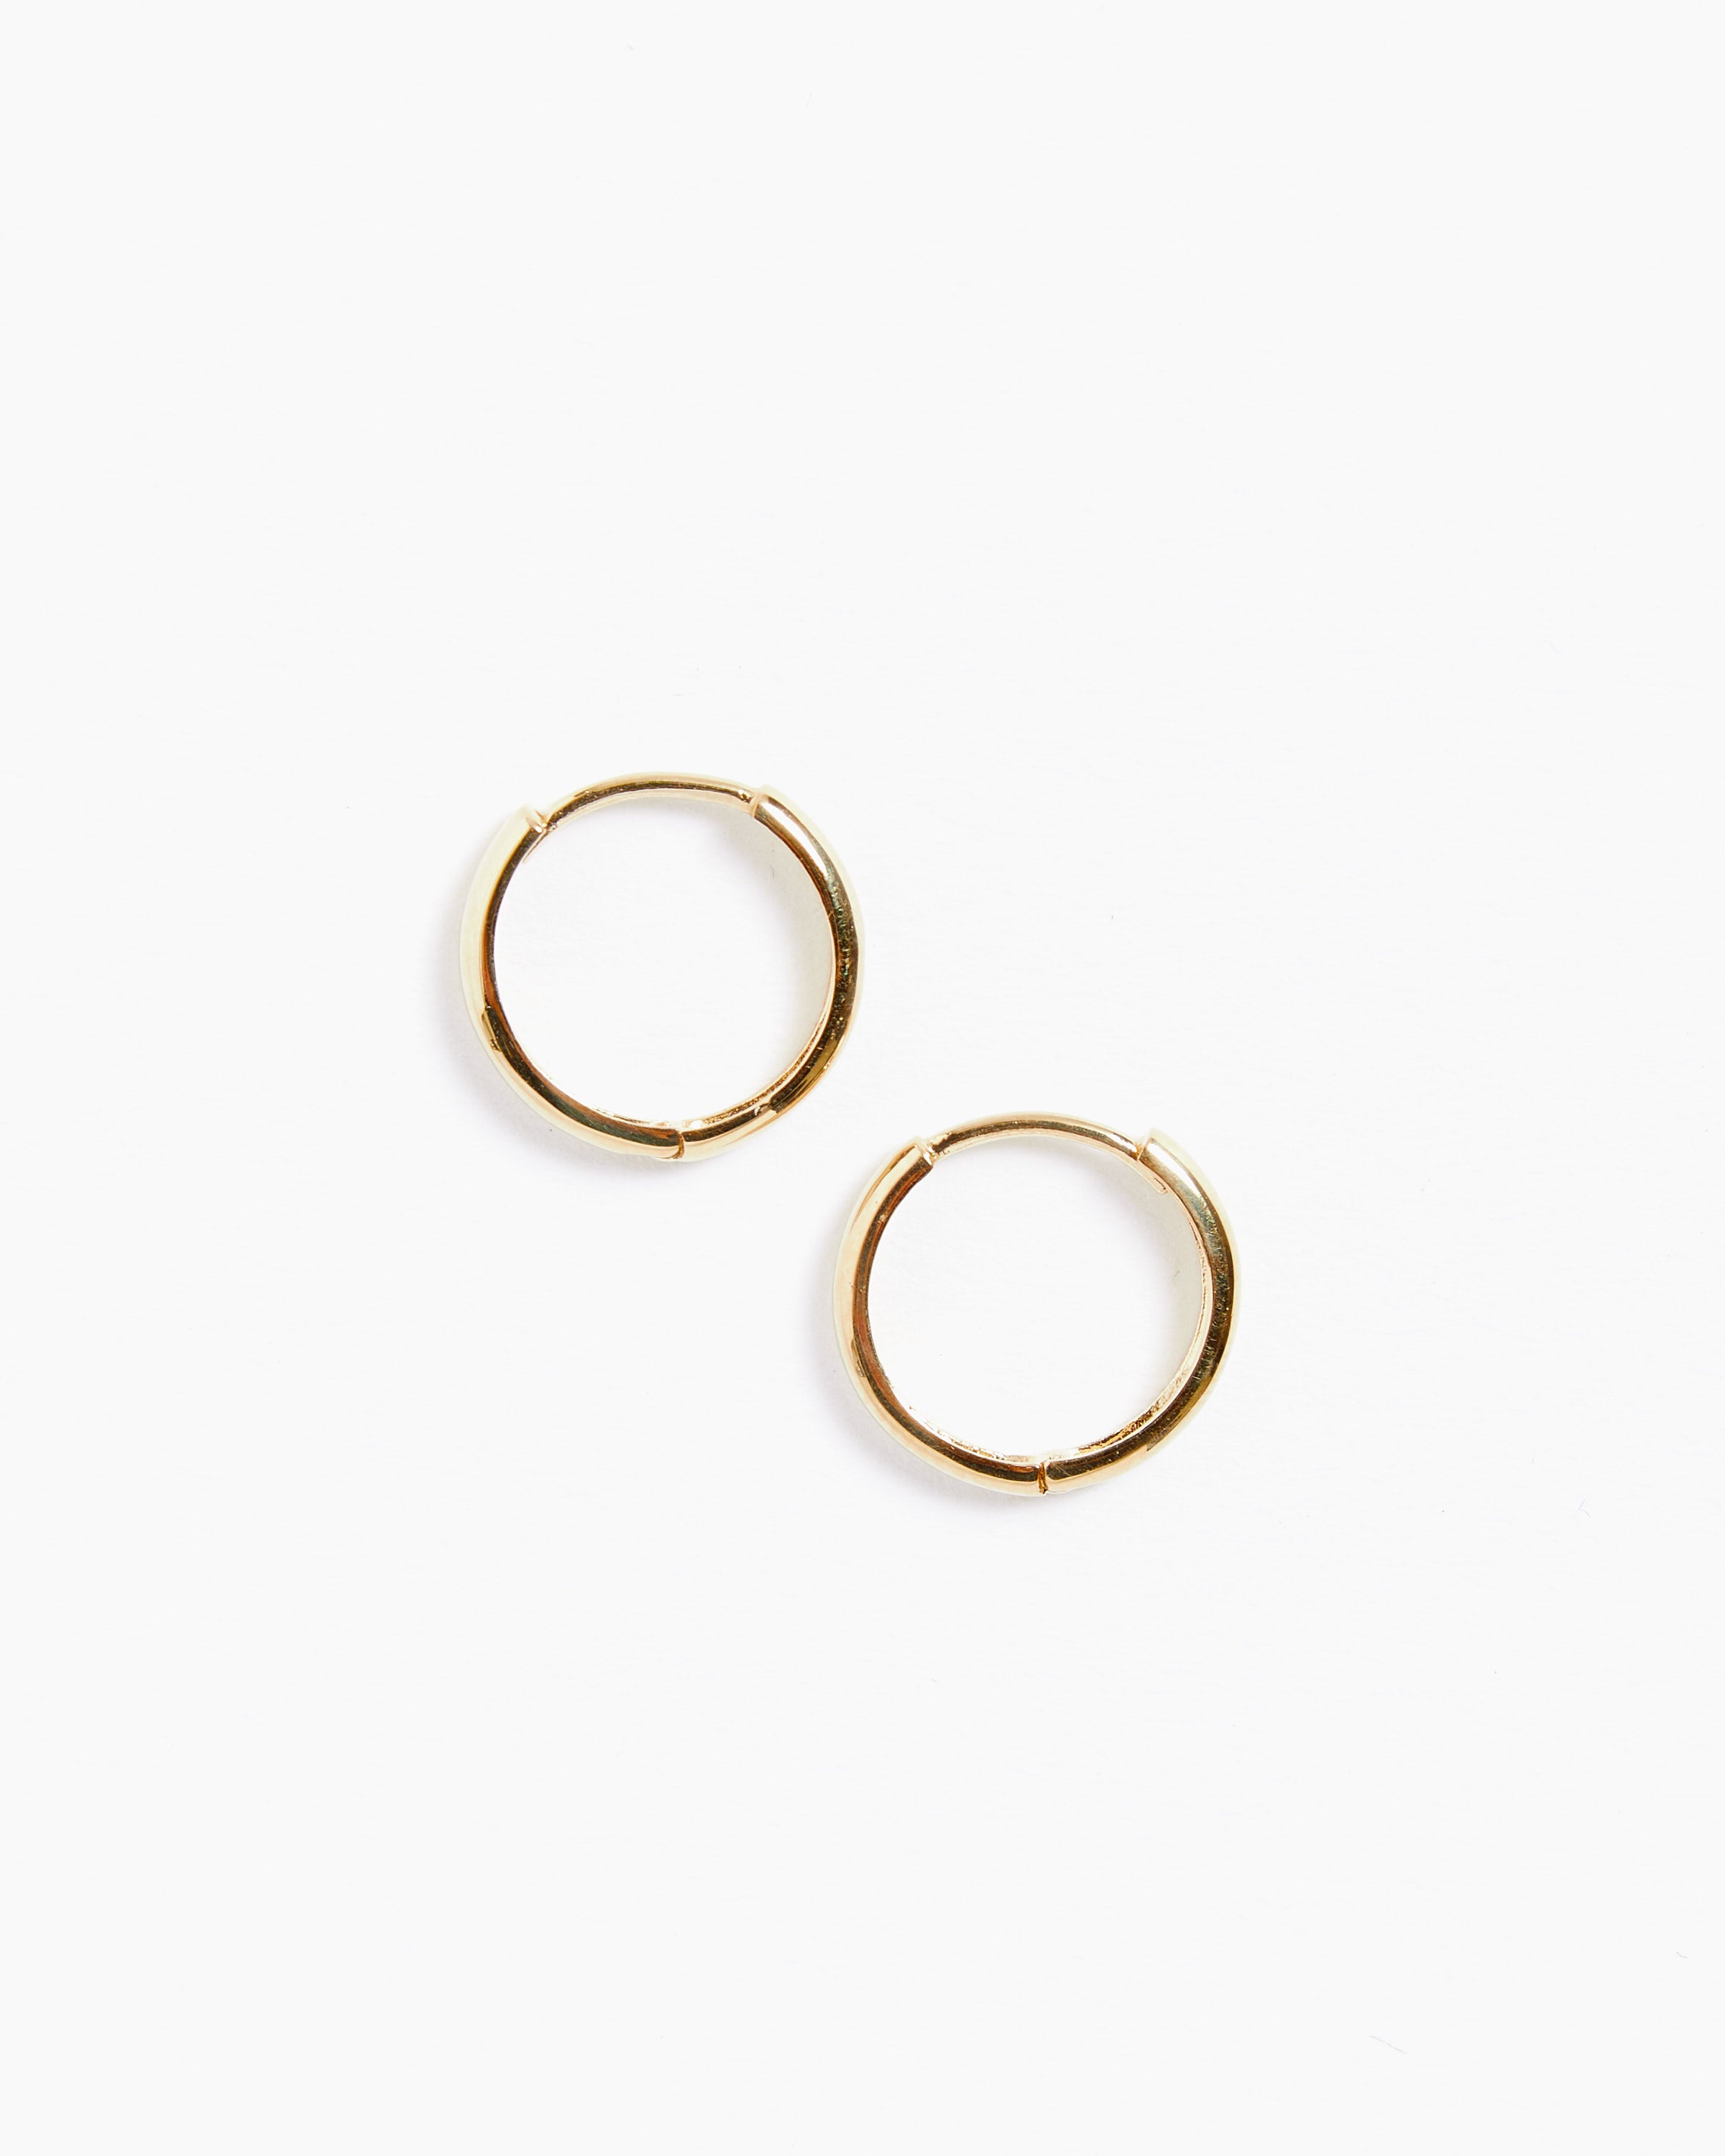 Mini Huggies Earrings in 14k Gold